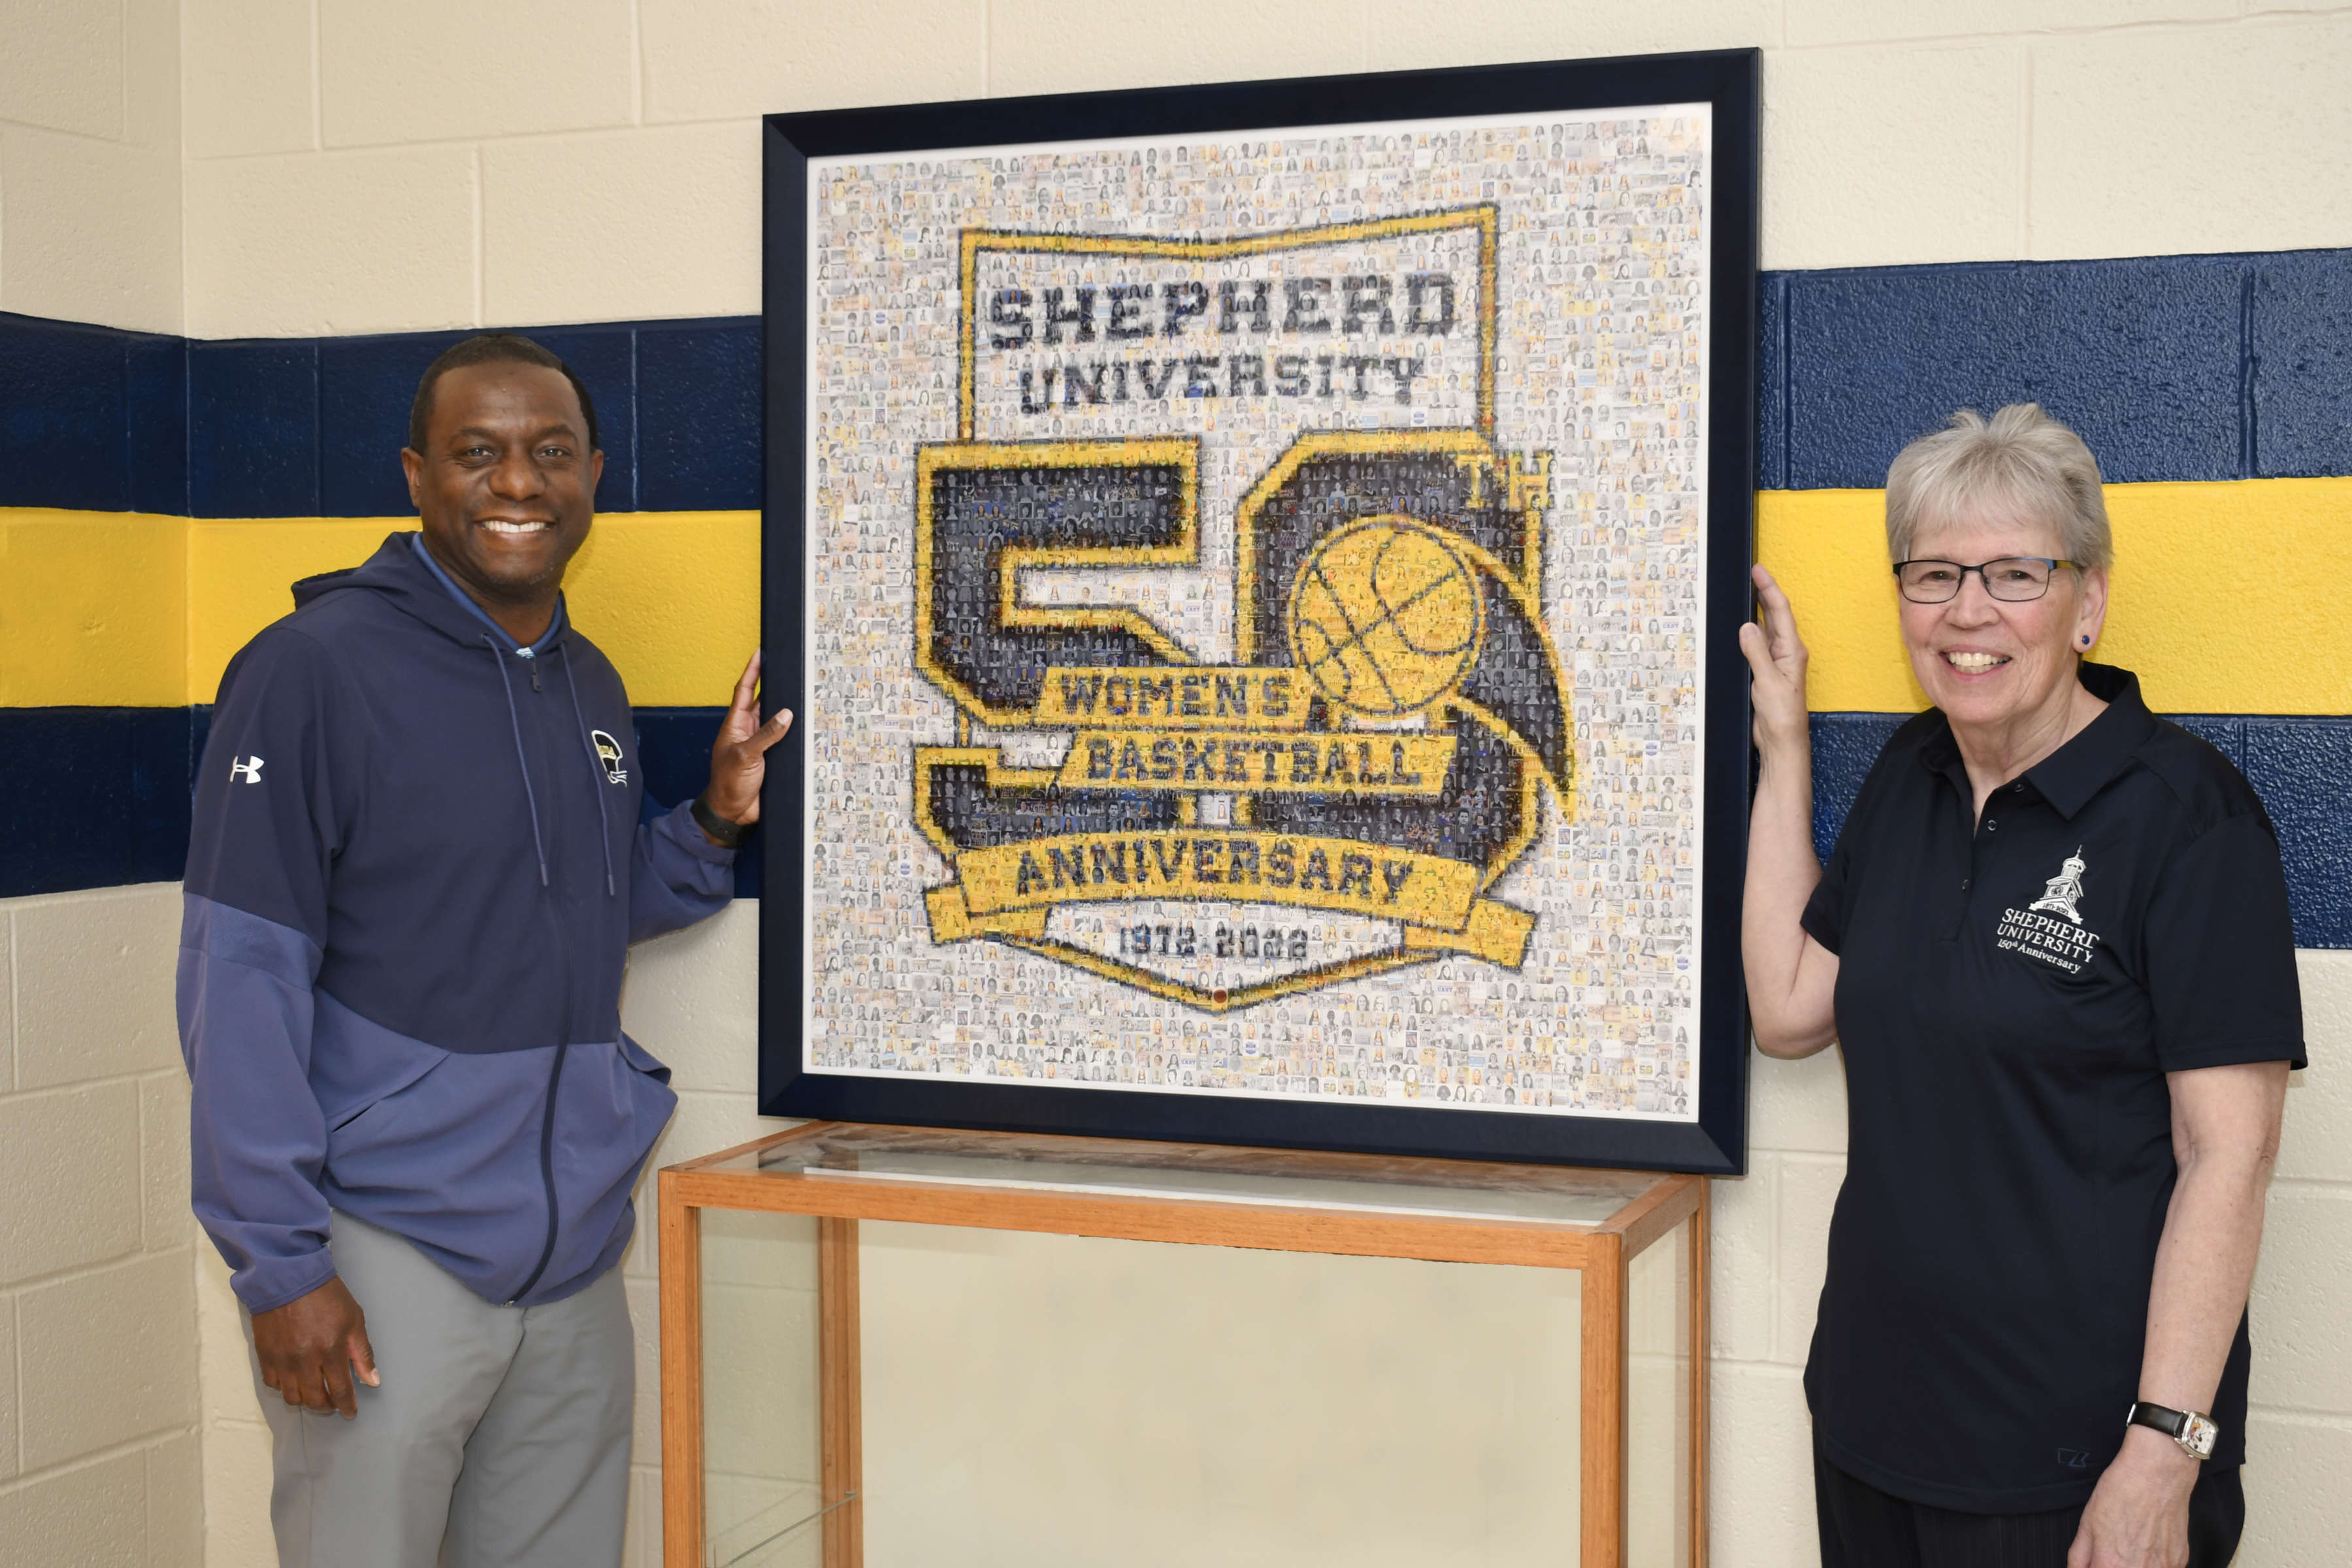 Photo of Chauncey Winbush and Lin Staub standing beside women's basketball 50th anniversary mosaic looking at camera smiling.